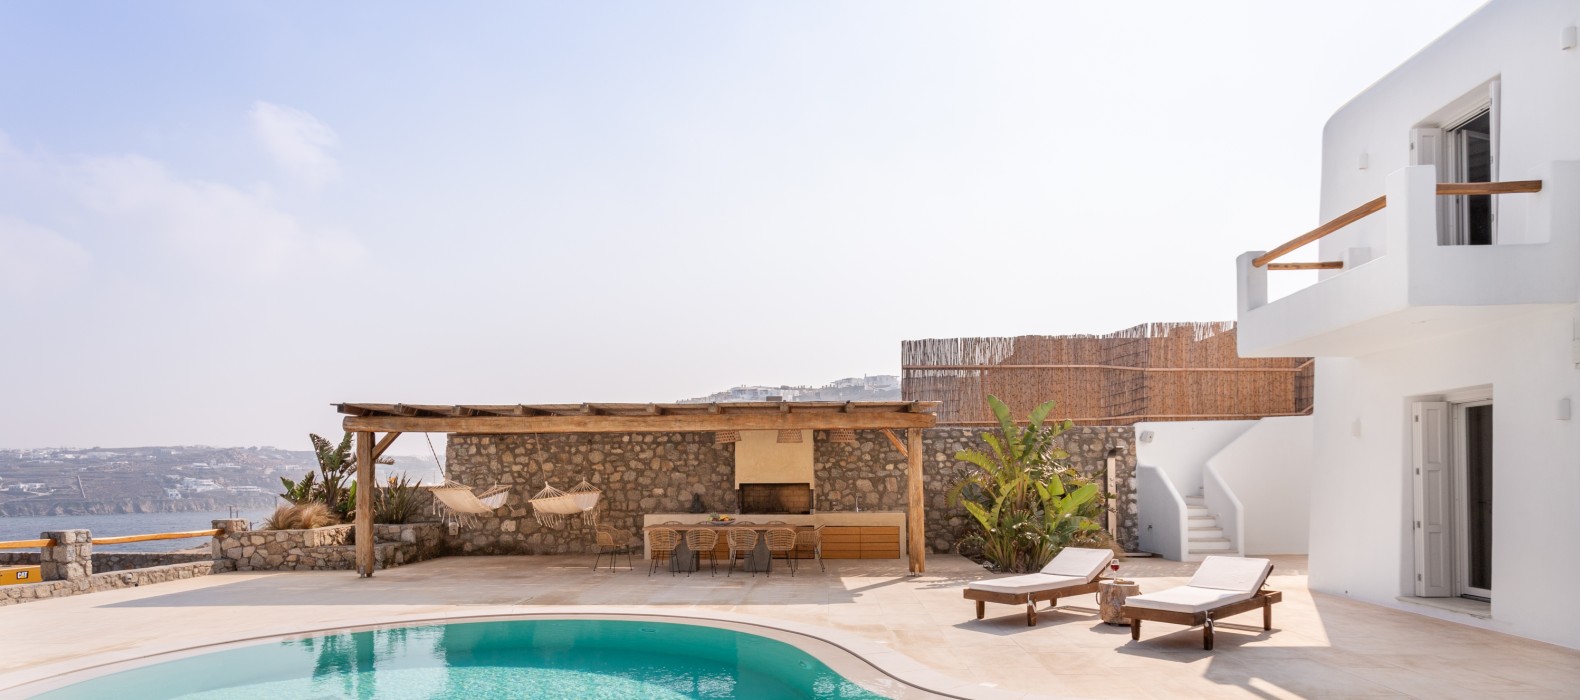 Exterior pool area of Villa Selene in Mykonos